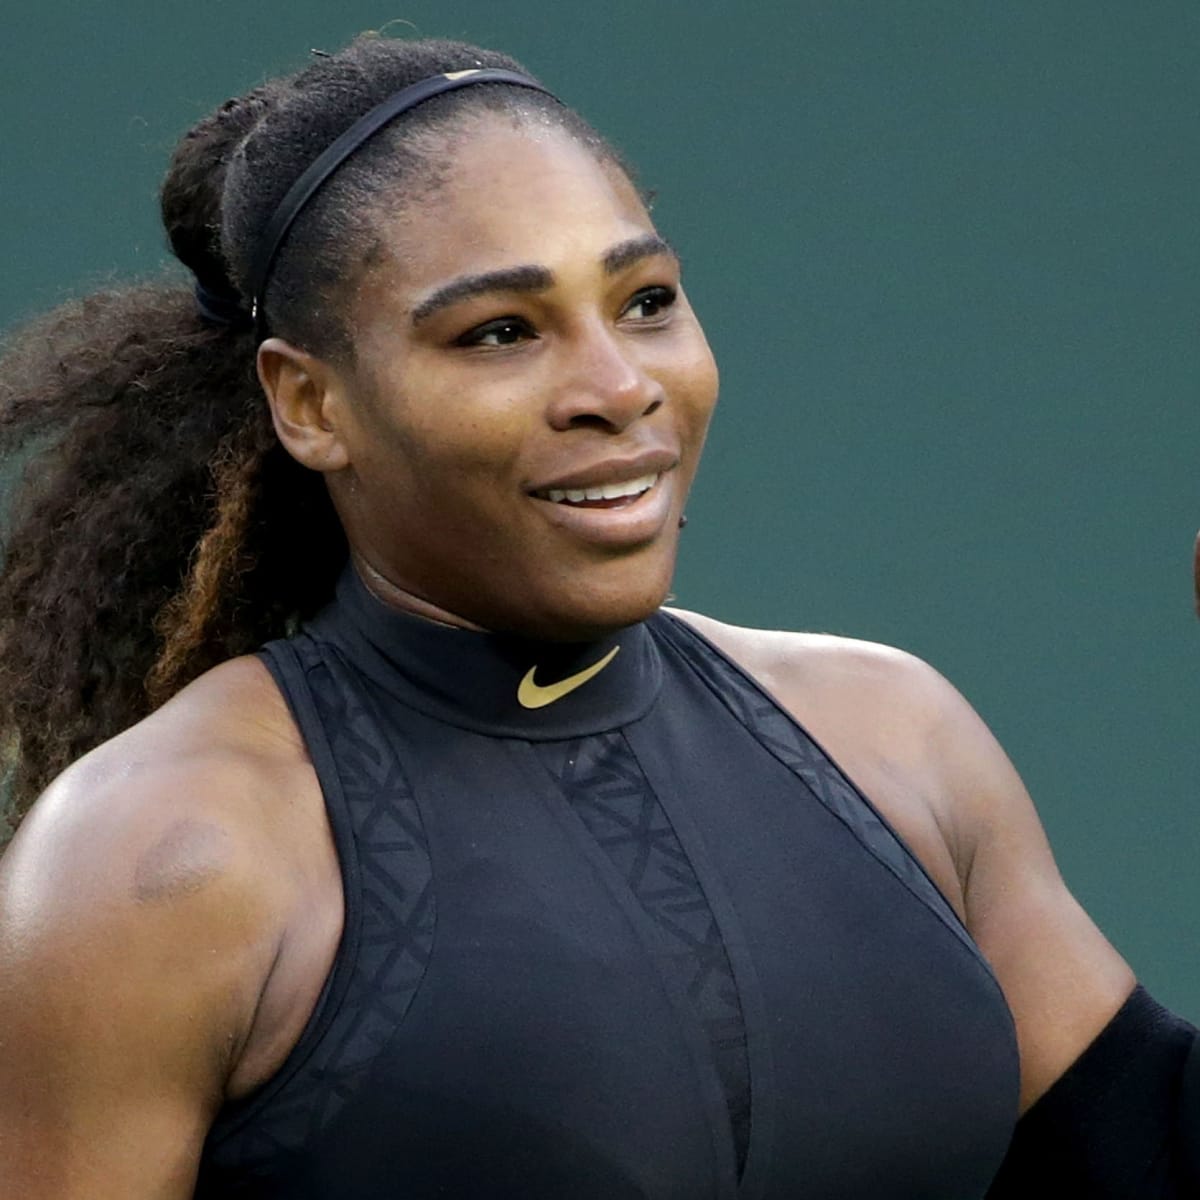 Serena vs Venus Williams live stream Watch online, TV, time